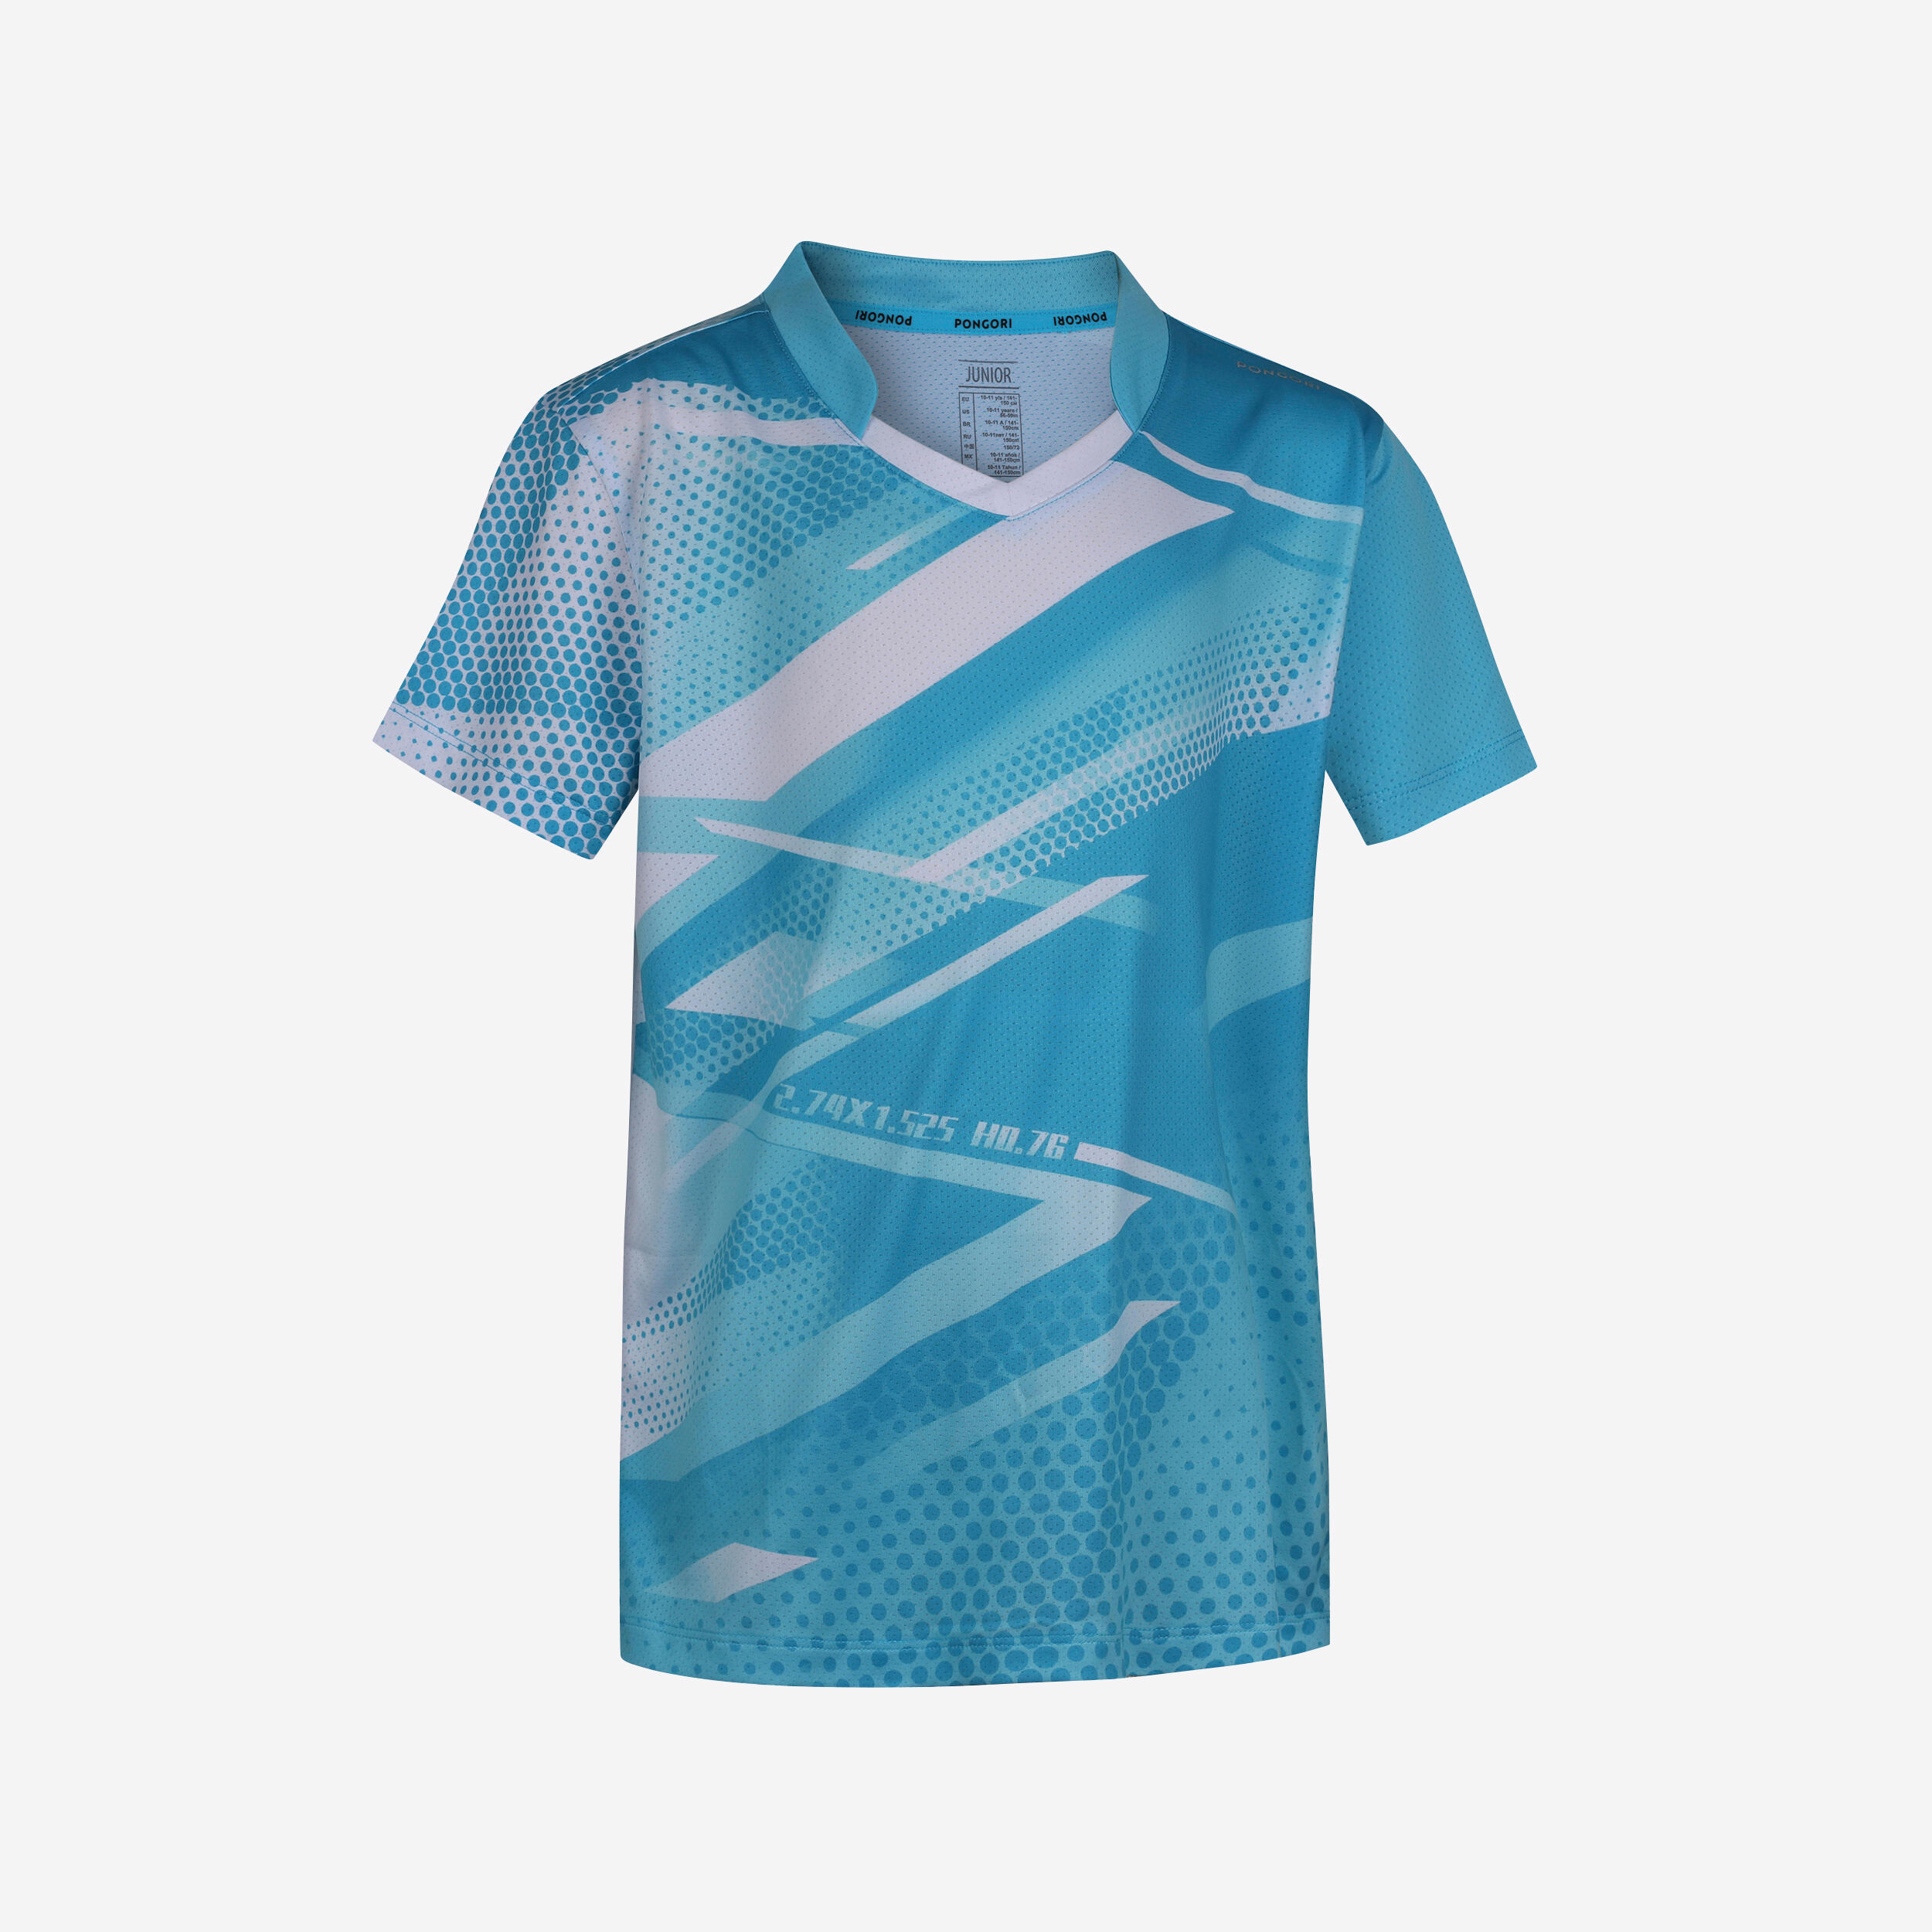 PONGORI Kids' Table Tennis T-Shirt TTP 560 - Blue/White